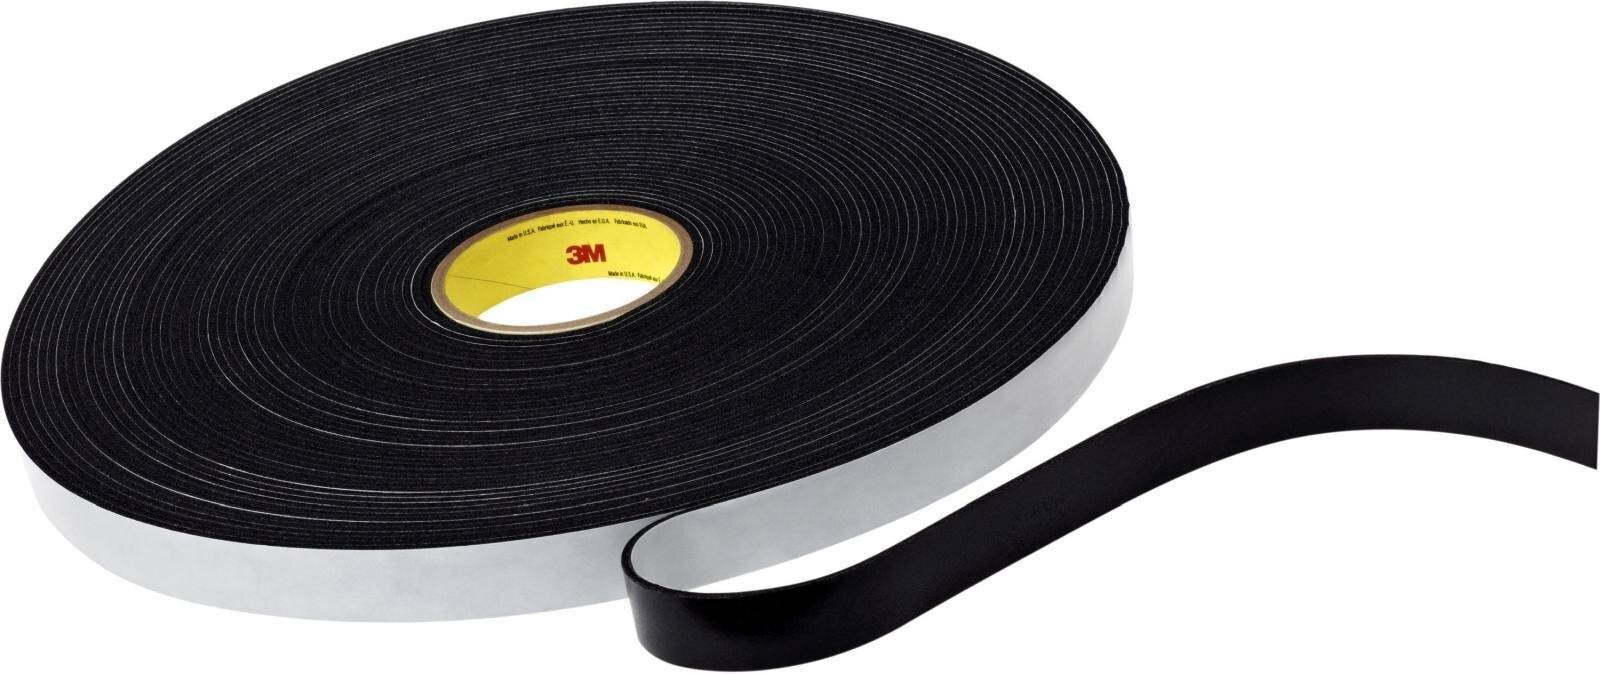 3M Single-sided vinyl foam adhesive tape 4508, black, 610 mm x 33 m, 3.2 mm